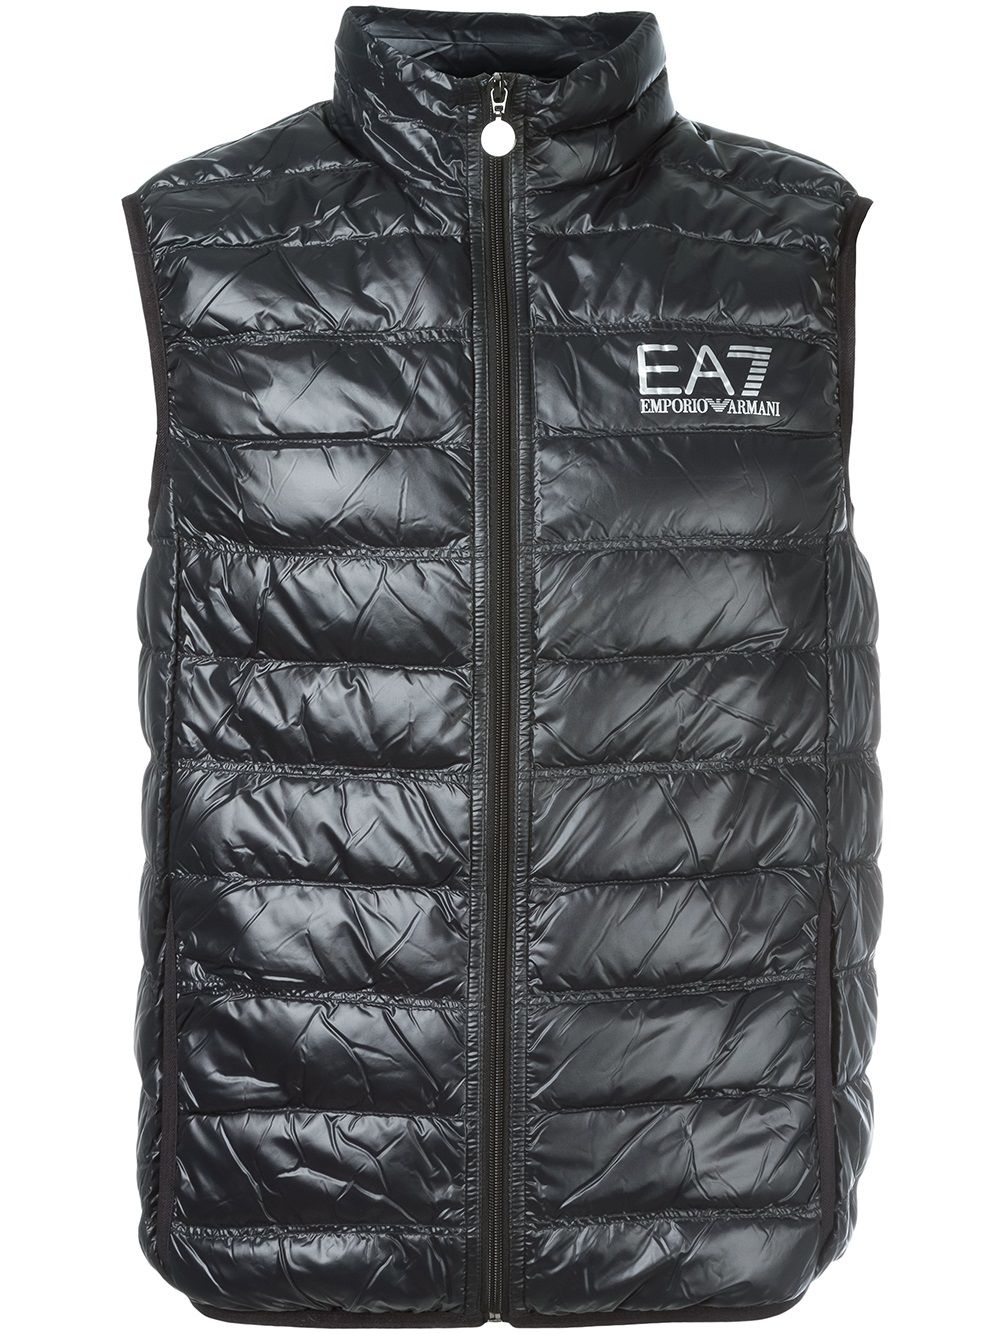 Ea7 Emporio Armani sleeveless zip up jacket - Black von Ea7 Emporio Armani